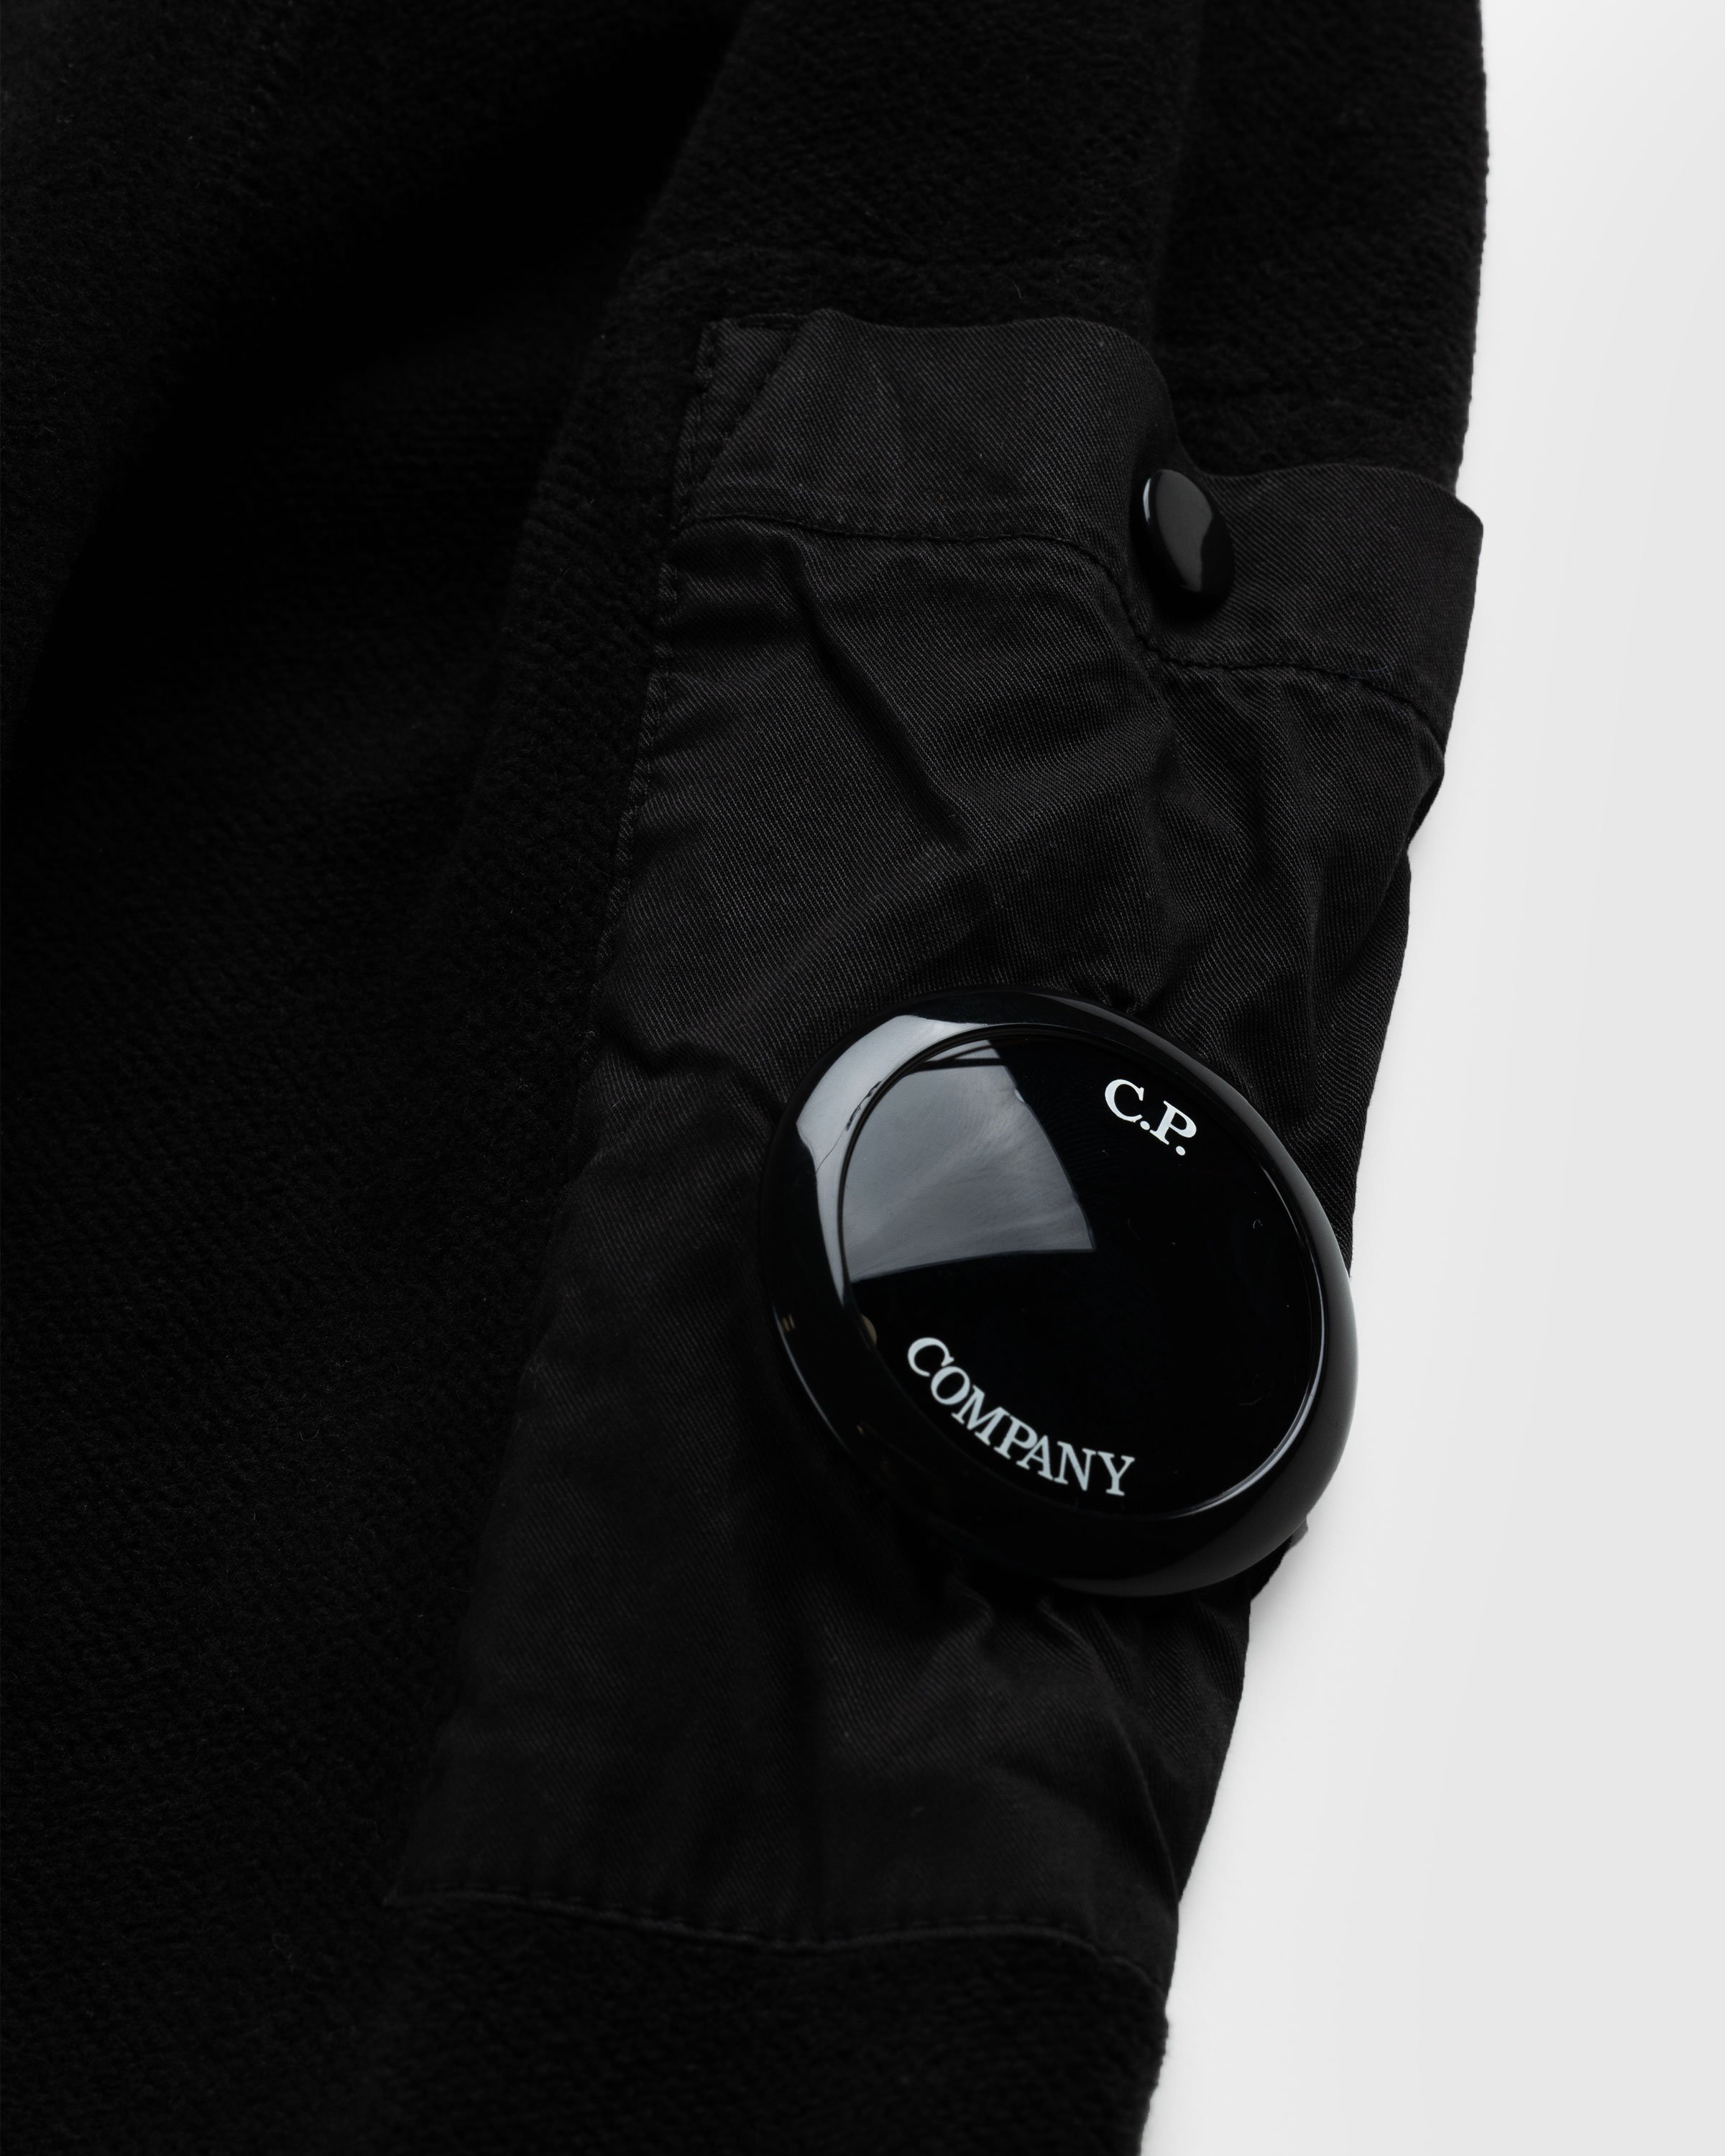 C.P. Company - Sweatshirts - Crew Neck - Clothing - Black - Image 6